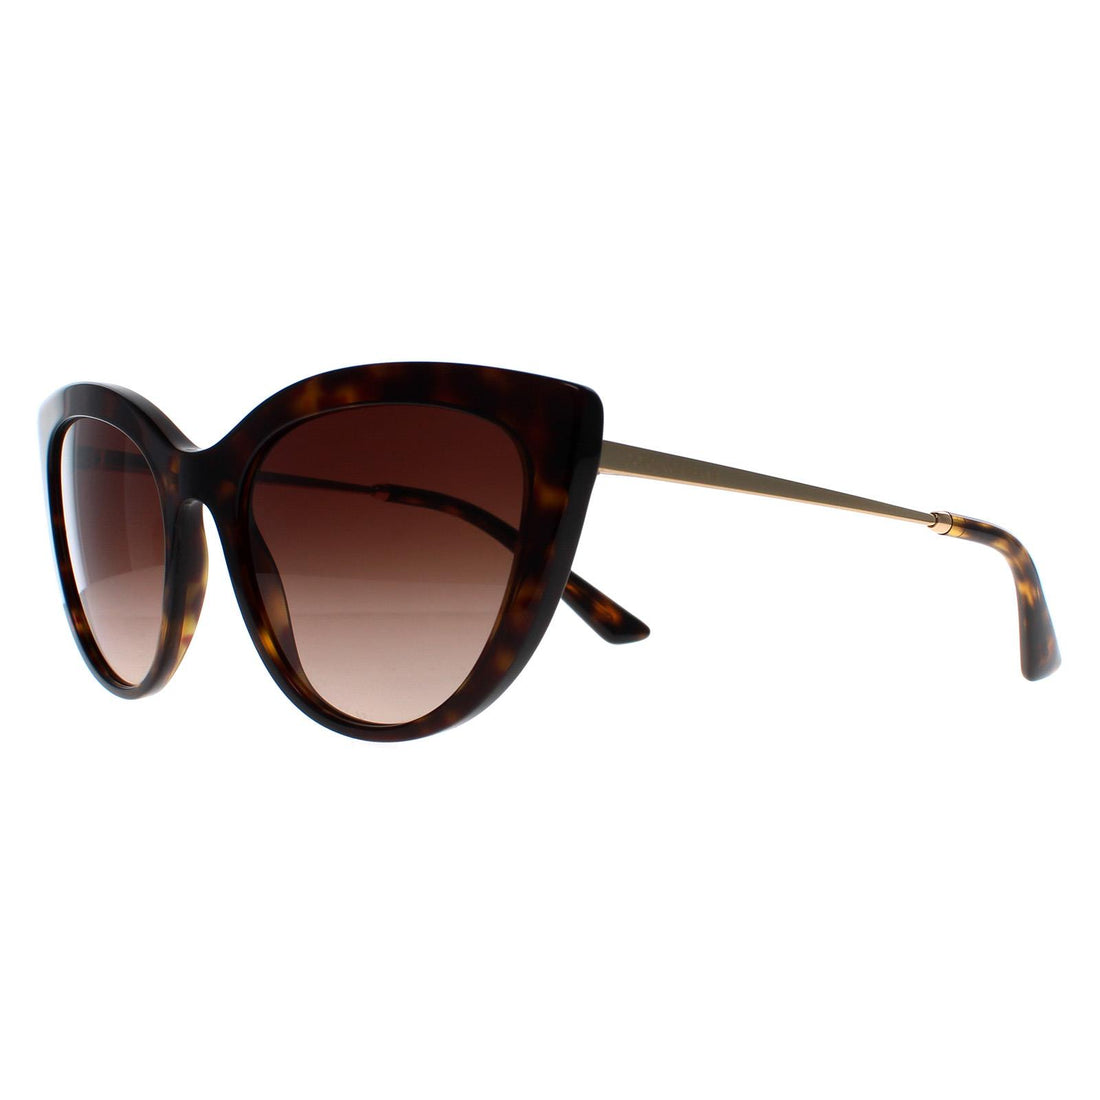 Dolce & Gabbana Sunglasses DG4408 502/13 Havana Brown Gradient